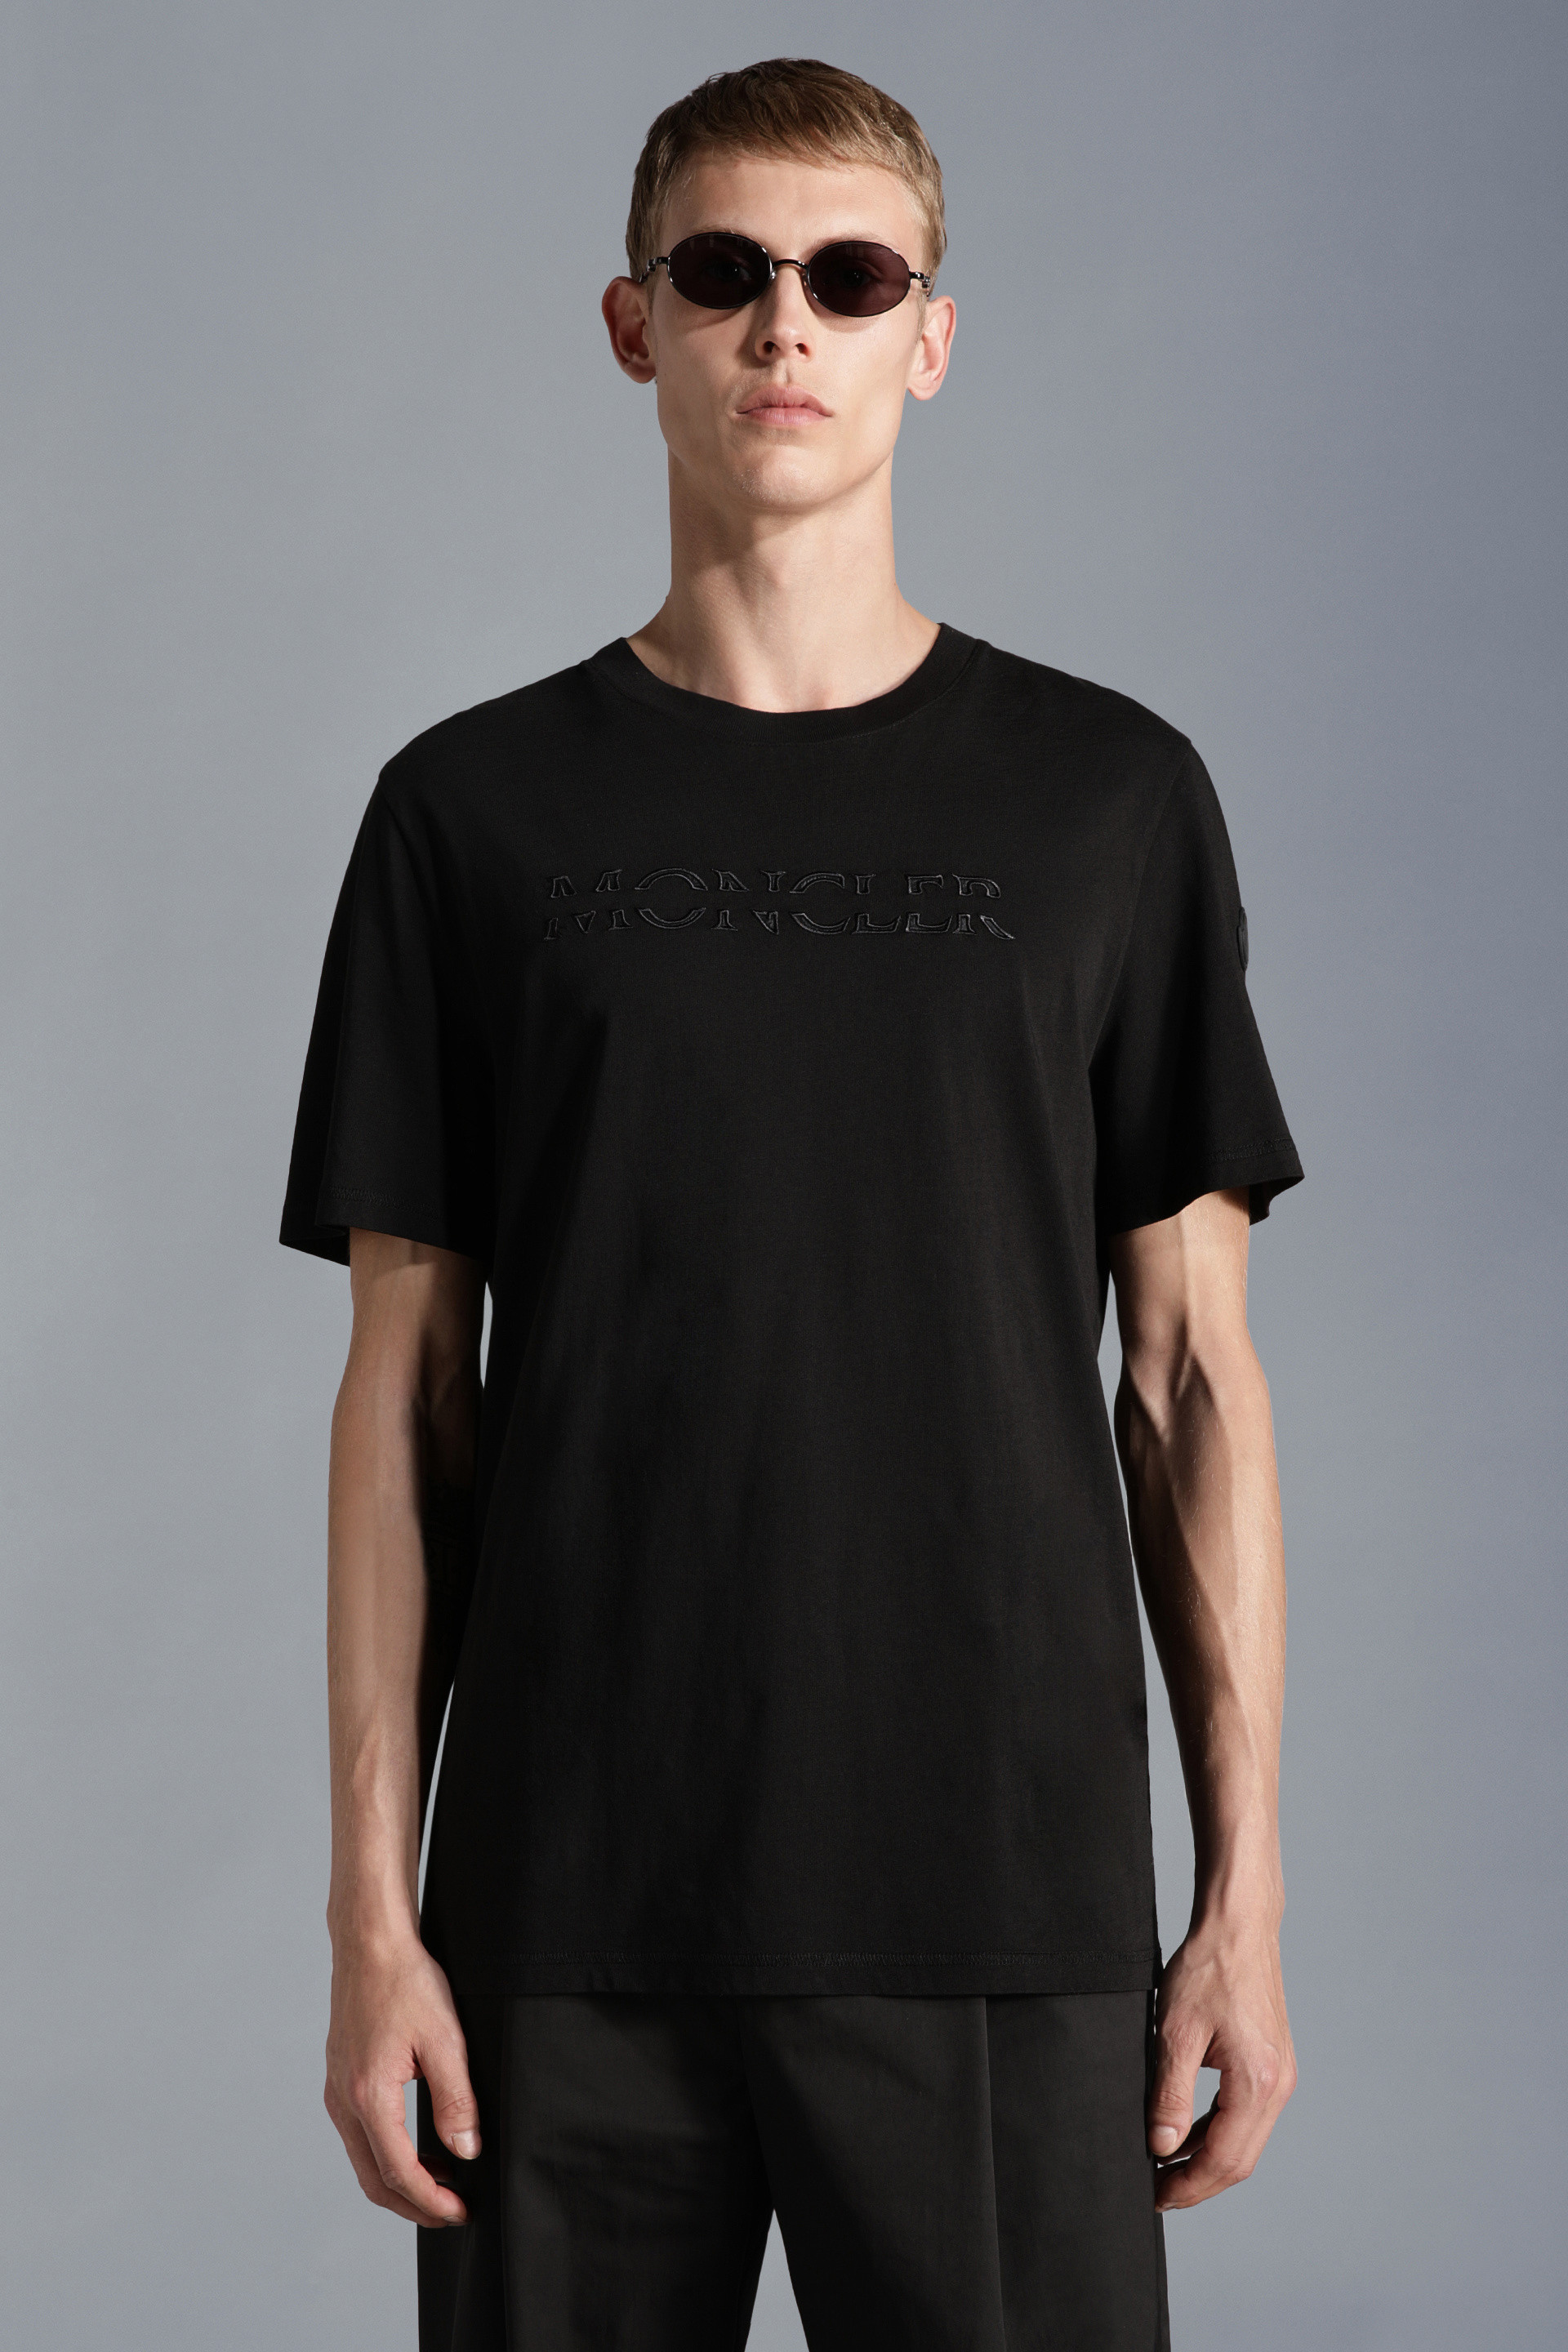 grond Filosofisch Weg Black Logo T-Shirt - Polos & T-shirts for Men | Moncler SK